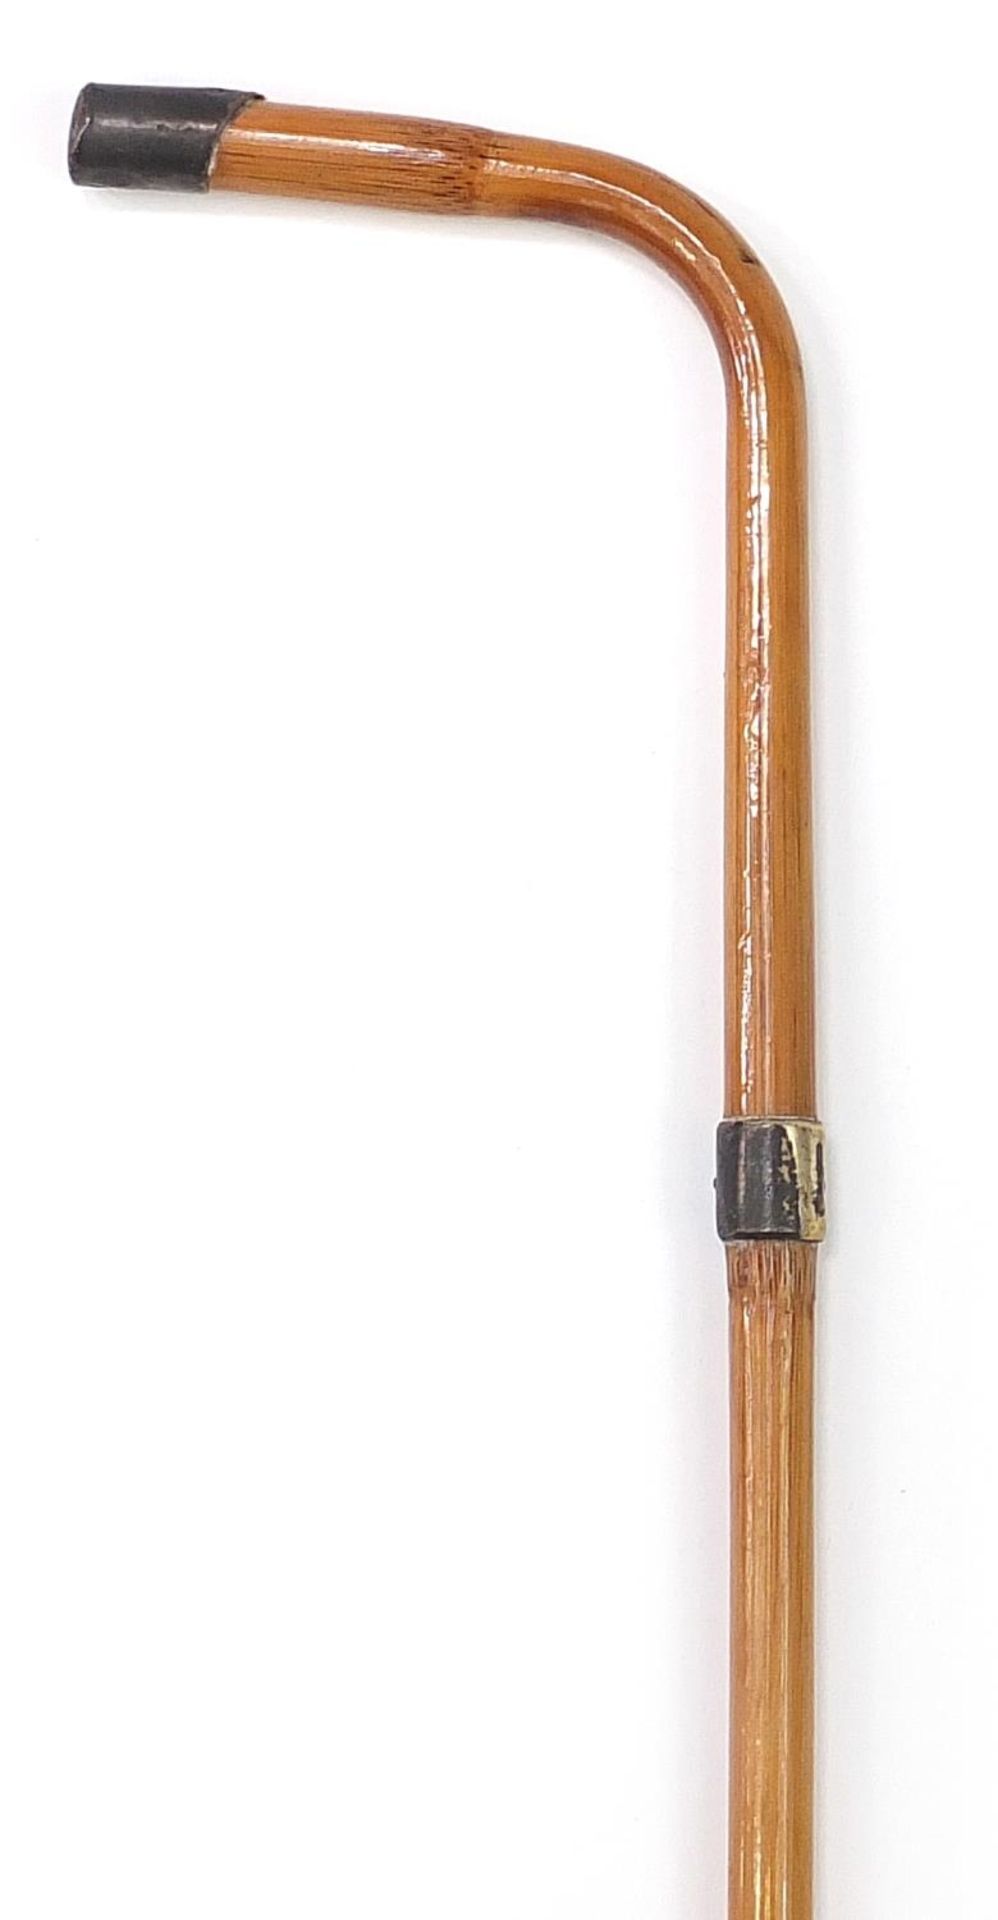 Bamboo walking stick with silver mounts, indistinct Birmingham hallmarks, 91cm in length